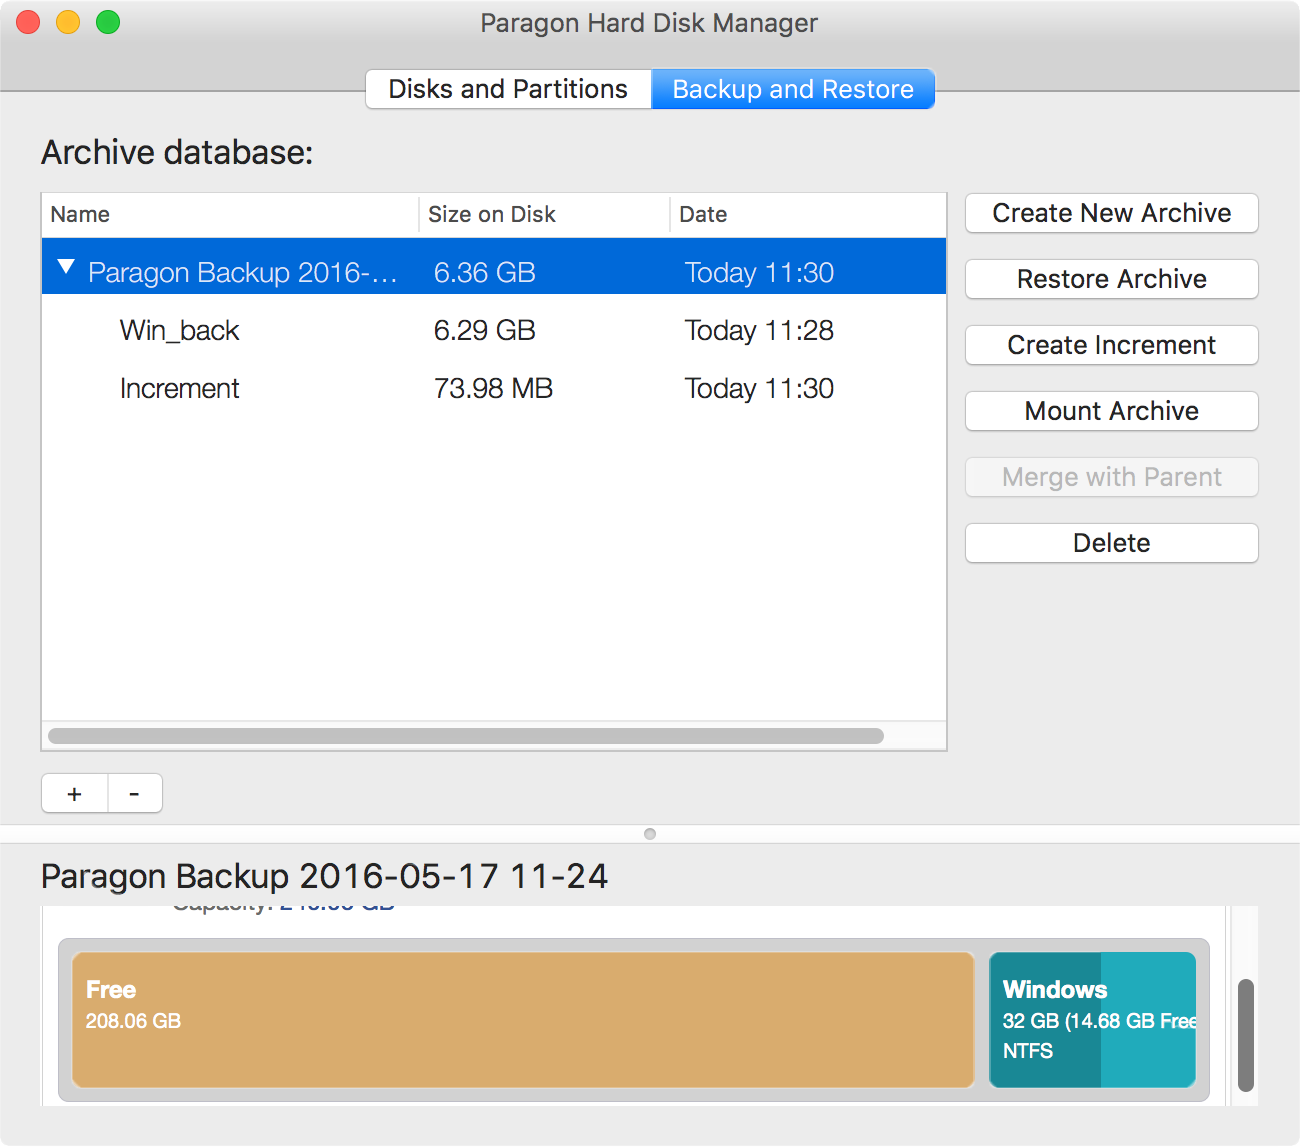 paragon hard disk manager mac